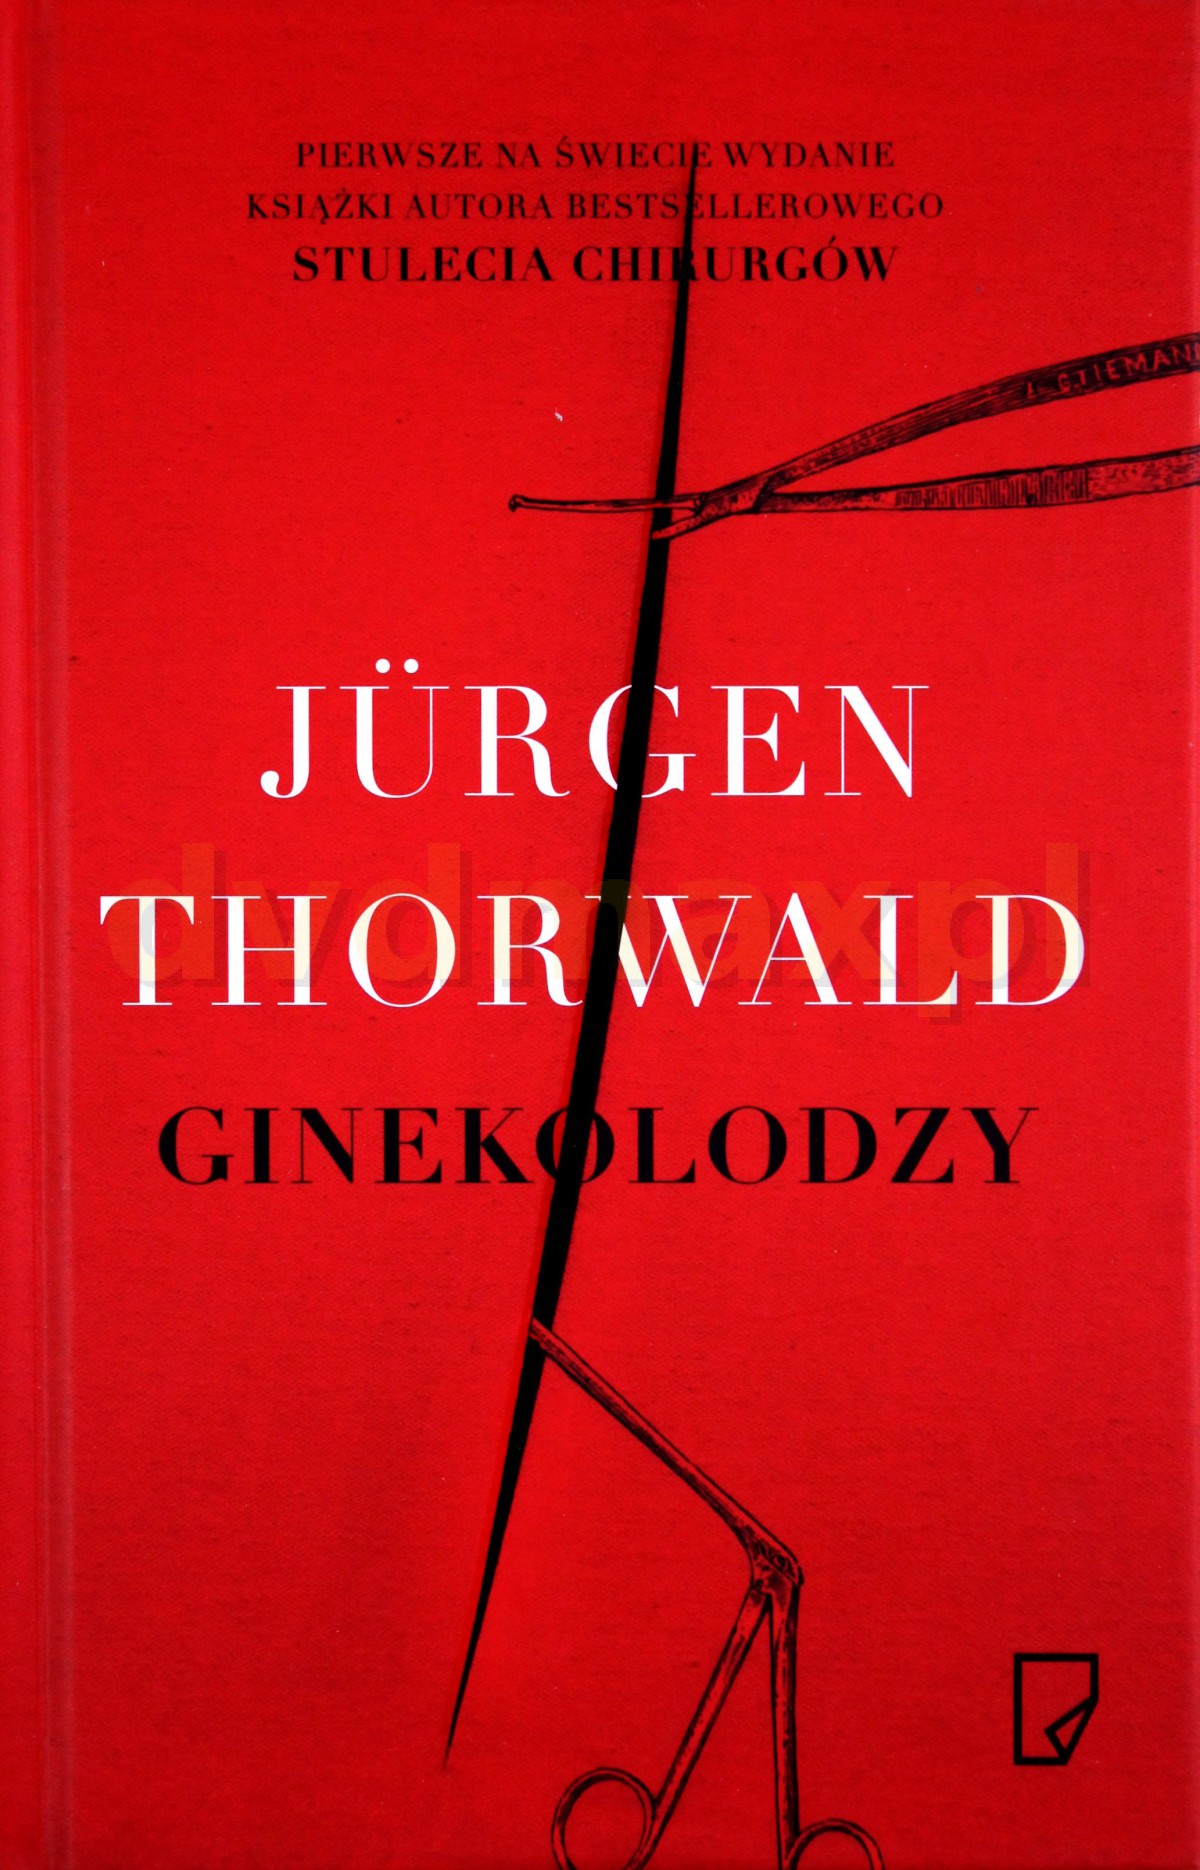 Ginekolodzy - Jurgen Thorwald (twarda) [KSIĄŻKA] - Jürgen Thorwald